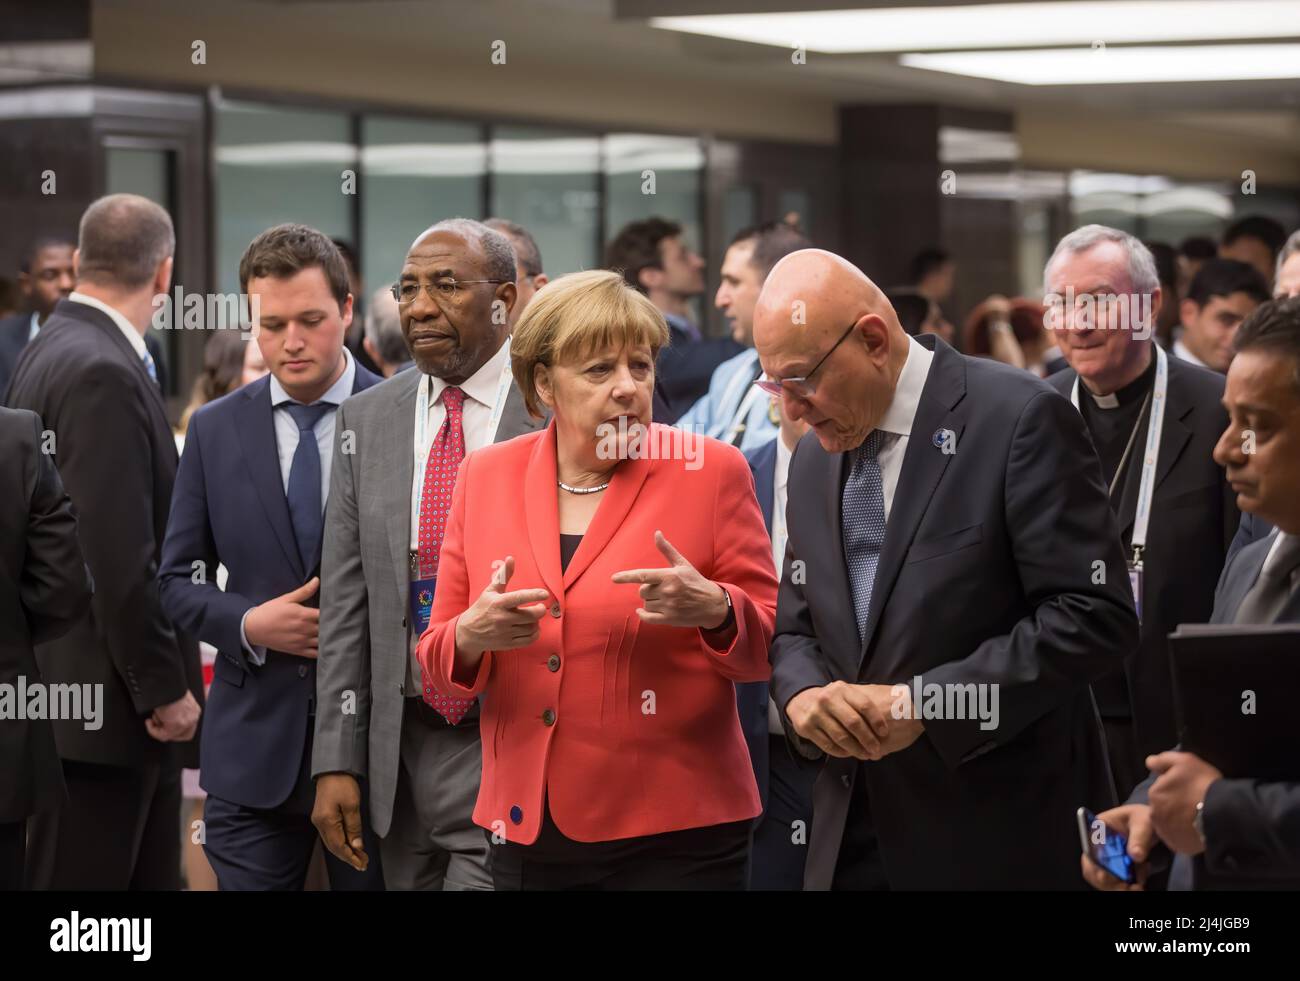 German Chancellor Angela Merkel (C) and Prime Minister of Lebanon Tammam Salam (R) during the World Humanitarian Summit in Istanbul. German Chancellor Angela Merkel (archival image) Stock Photo